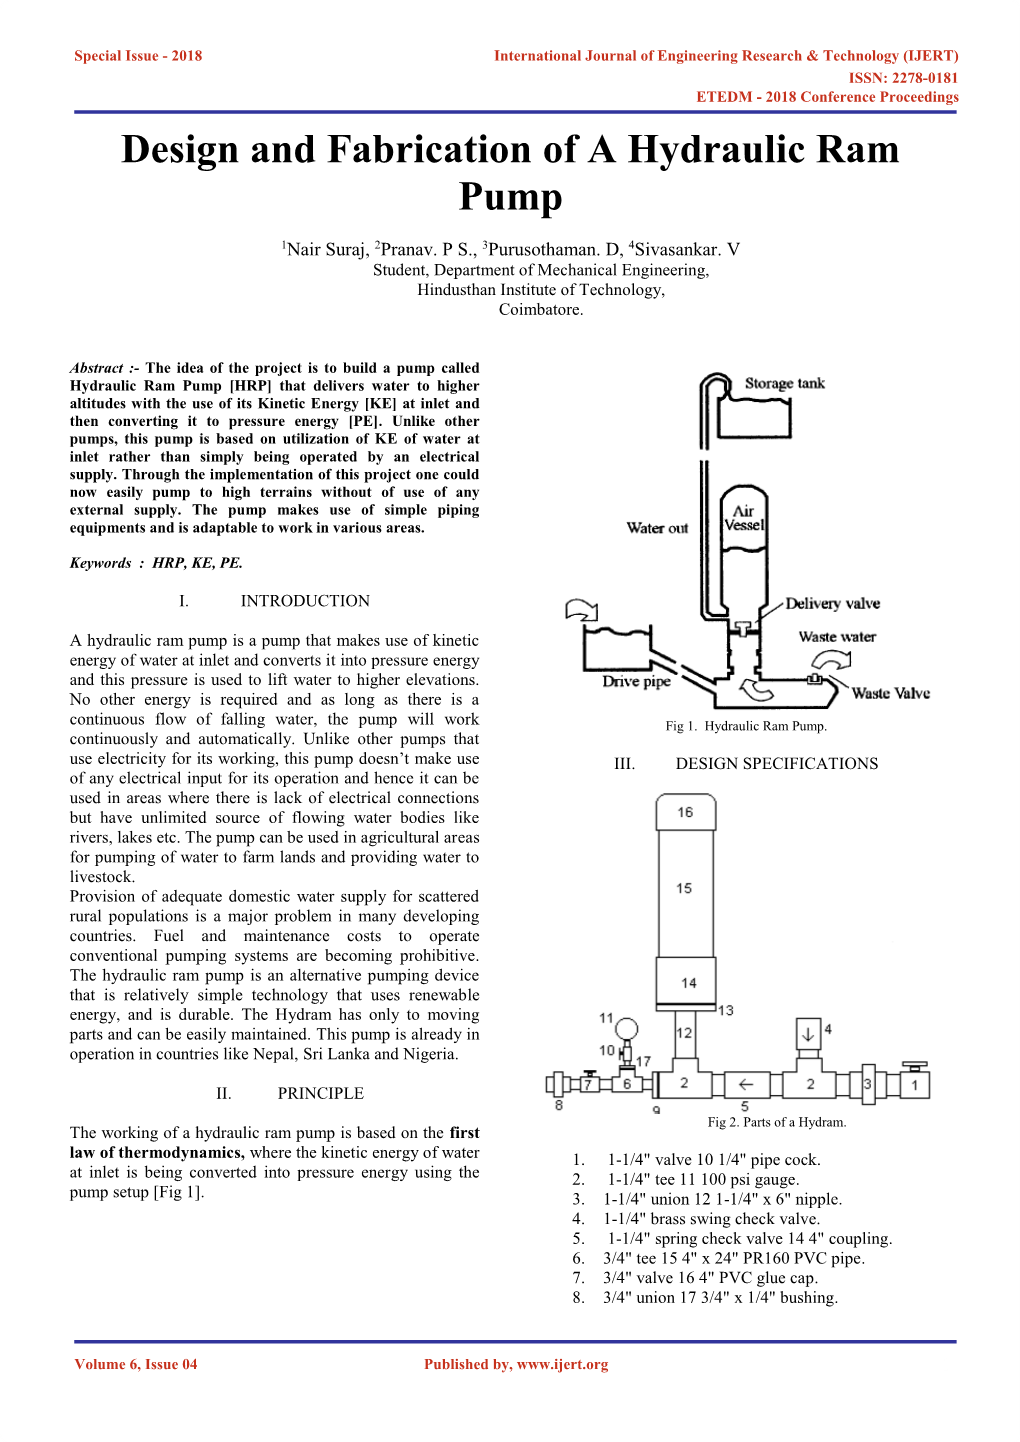 Design and Fabrication of a Hydraulic Ram Pump